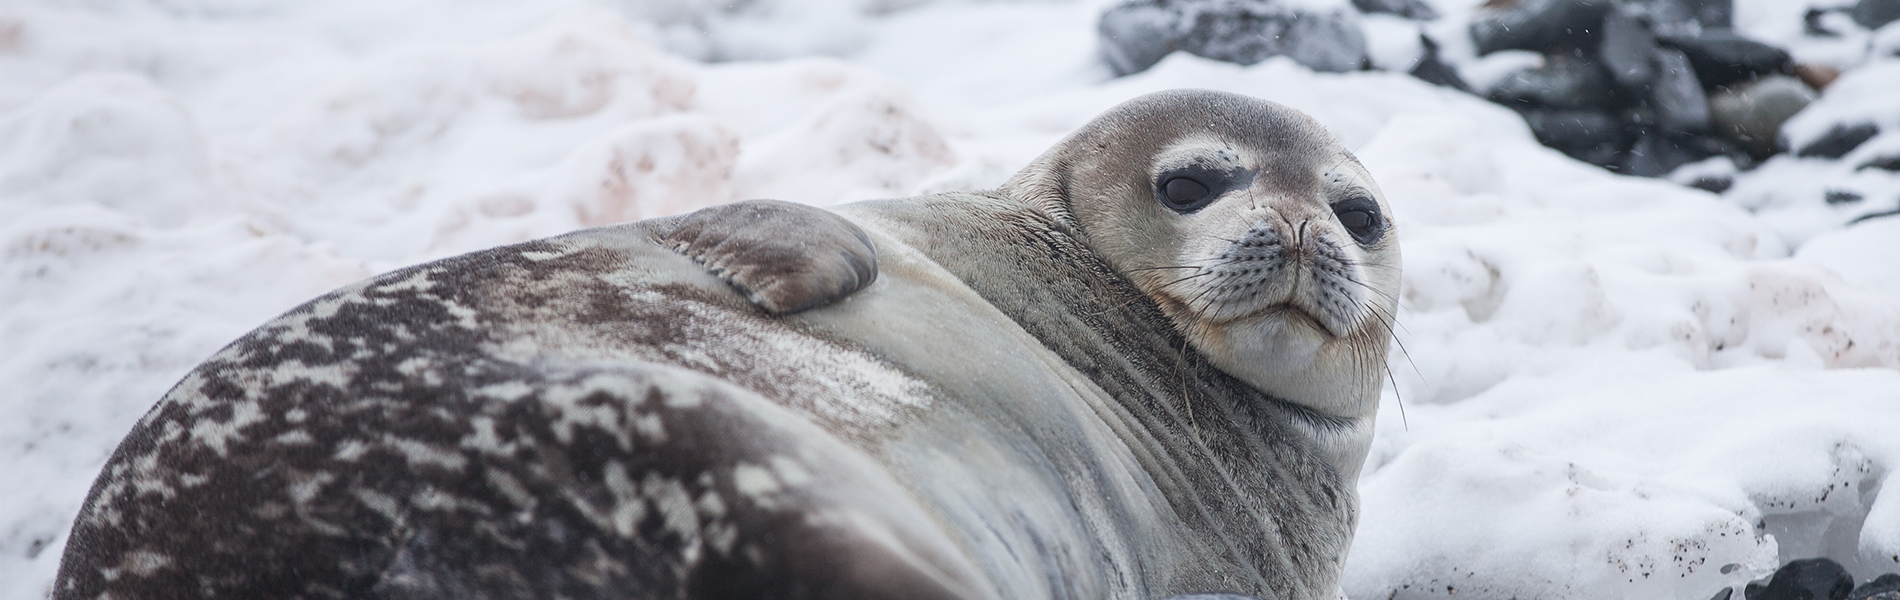 Gradlyn Petshipping Header Tiertransport Zoo Seehund Seal Robbe Mallorca